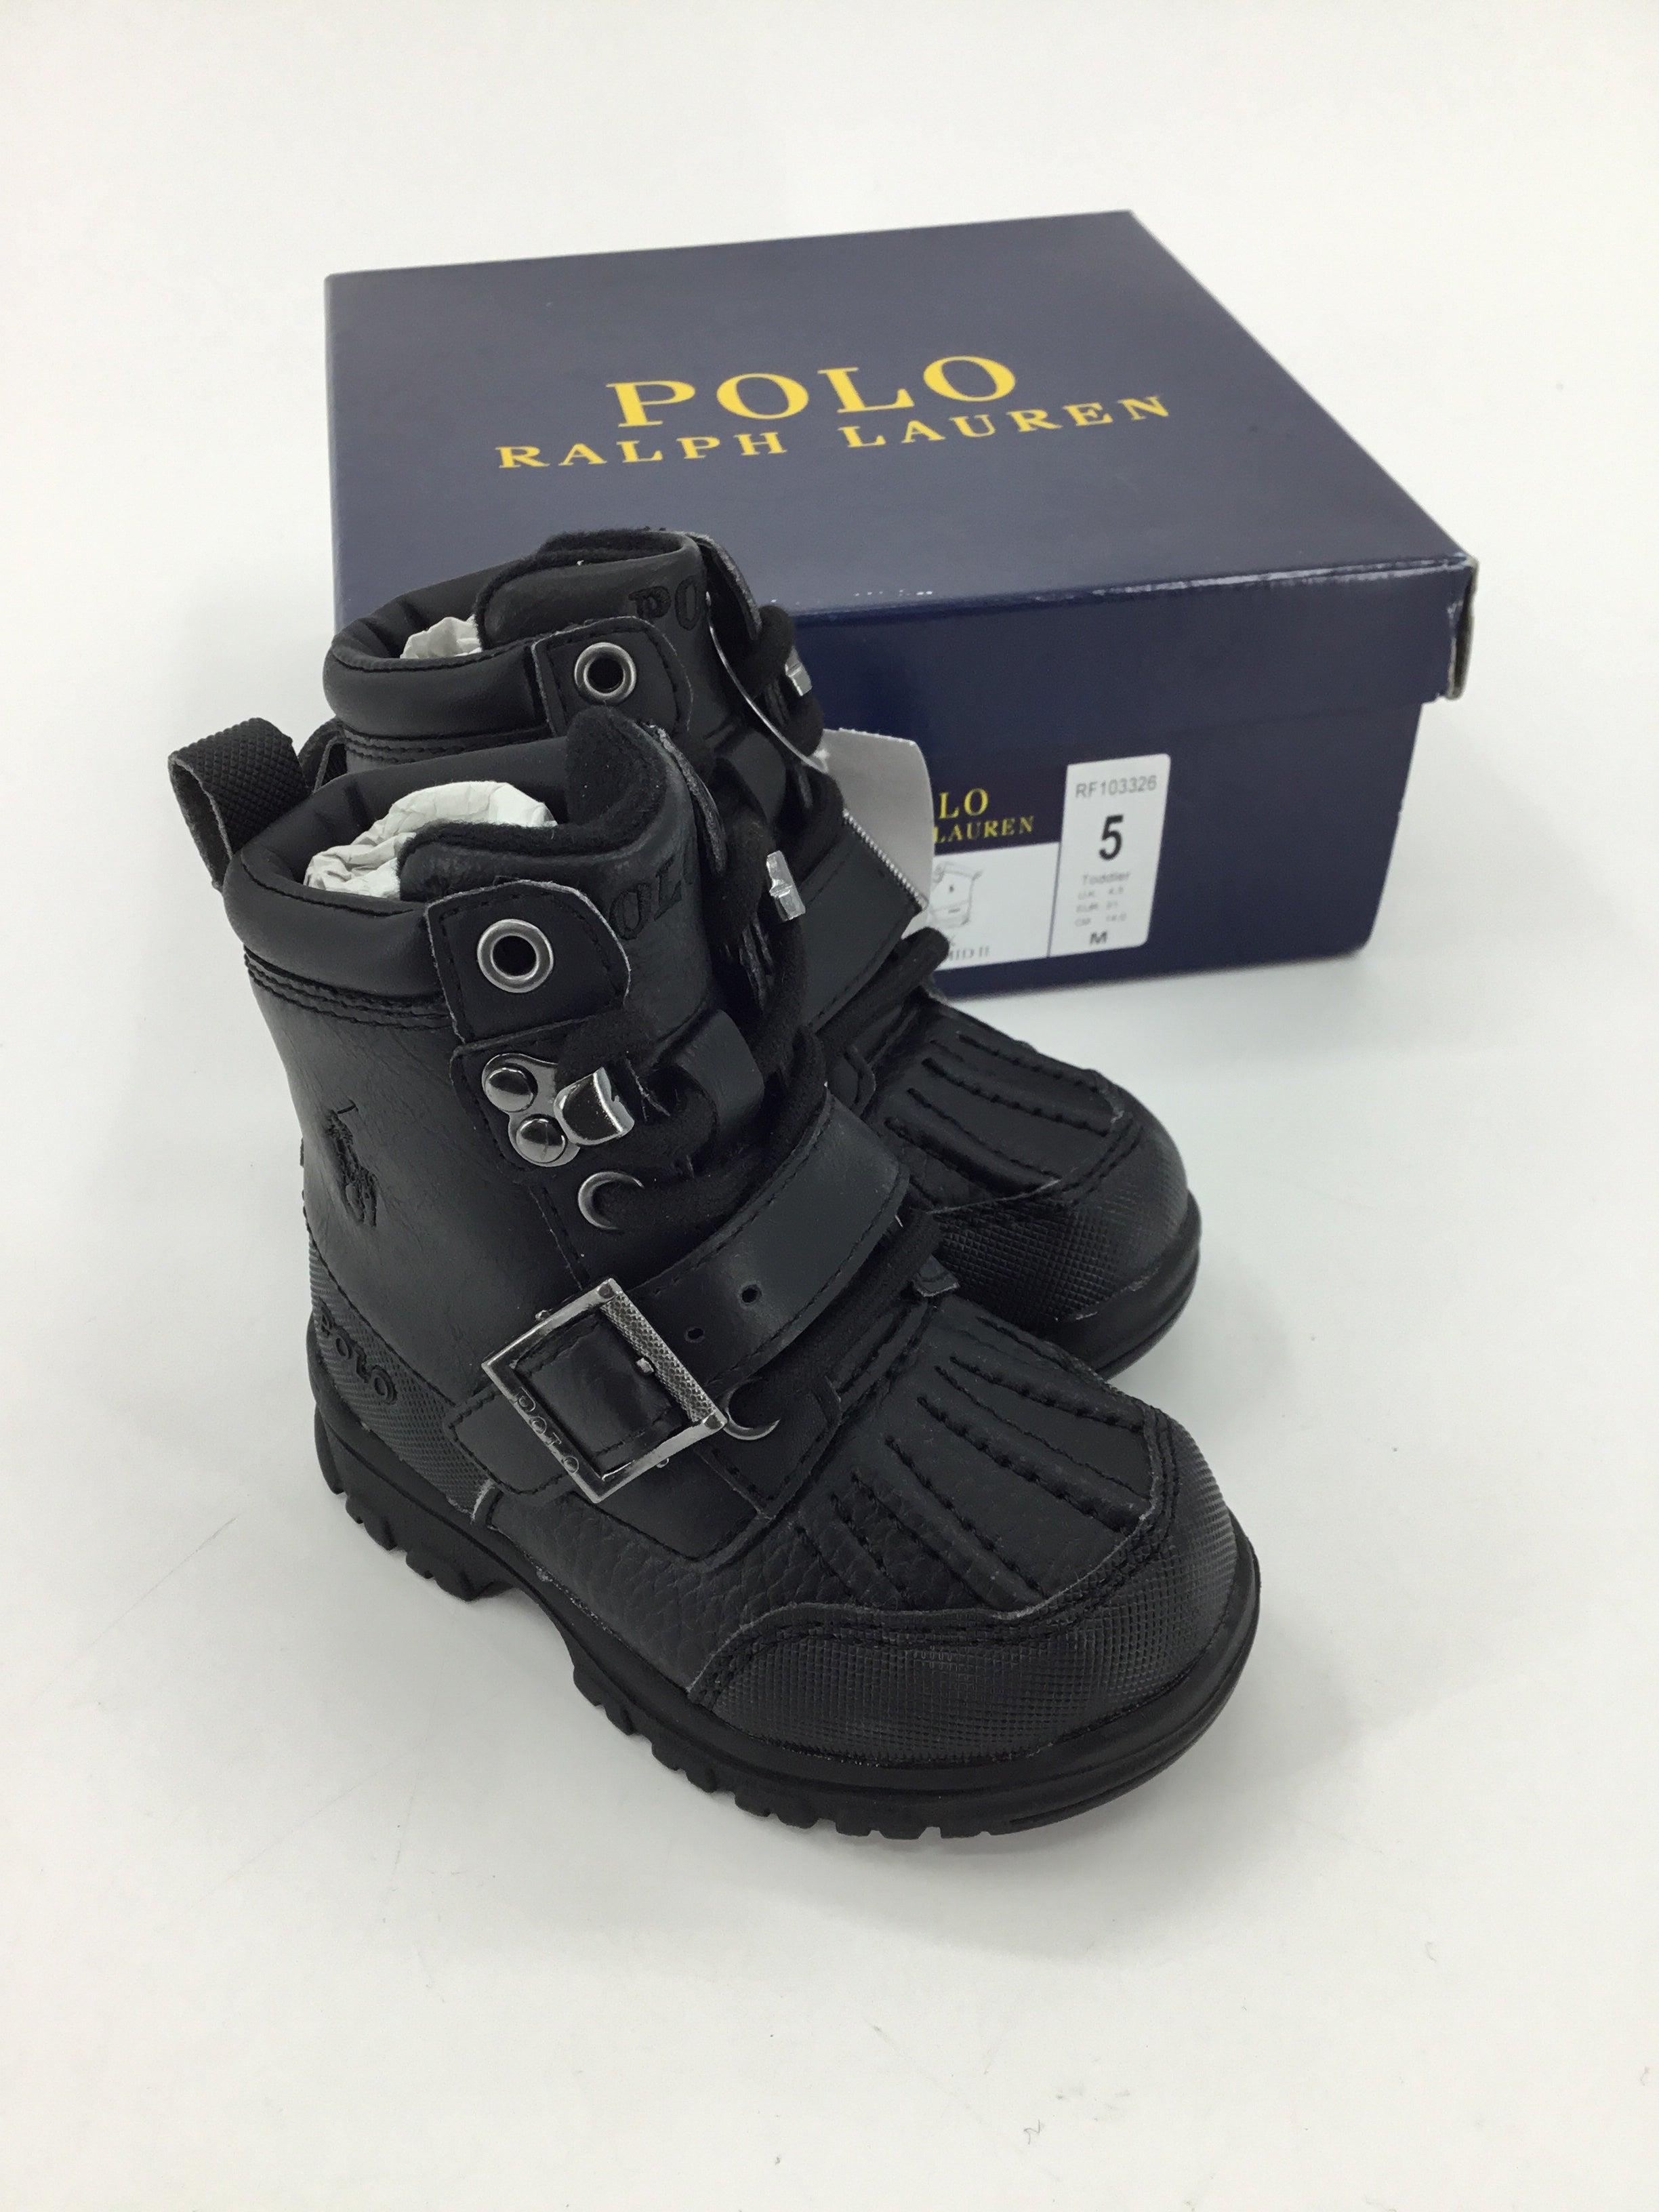 Ralph Lauren Child Size 5 Toddler Black Boots